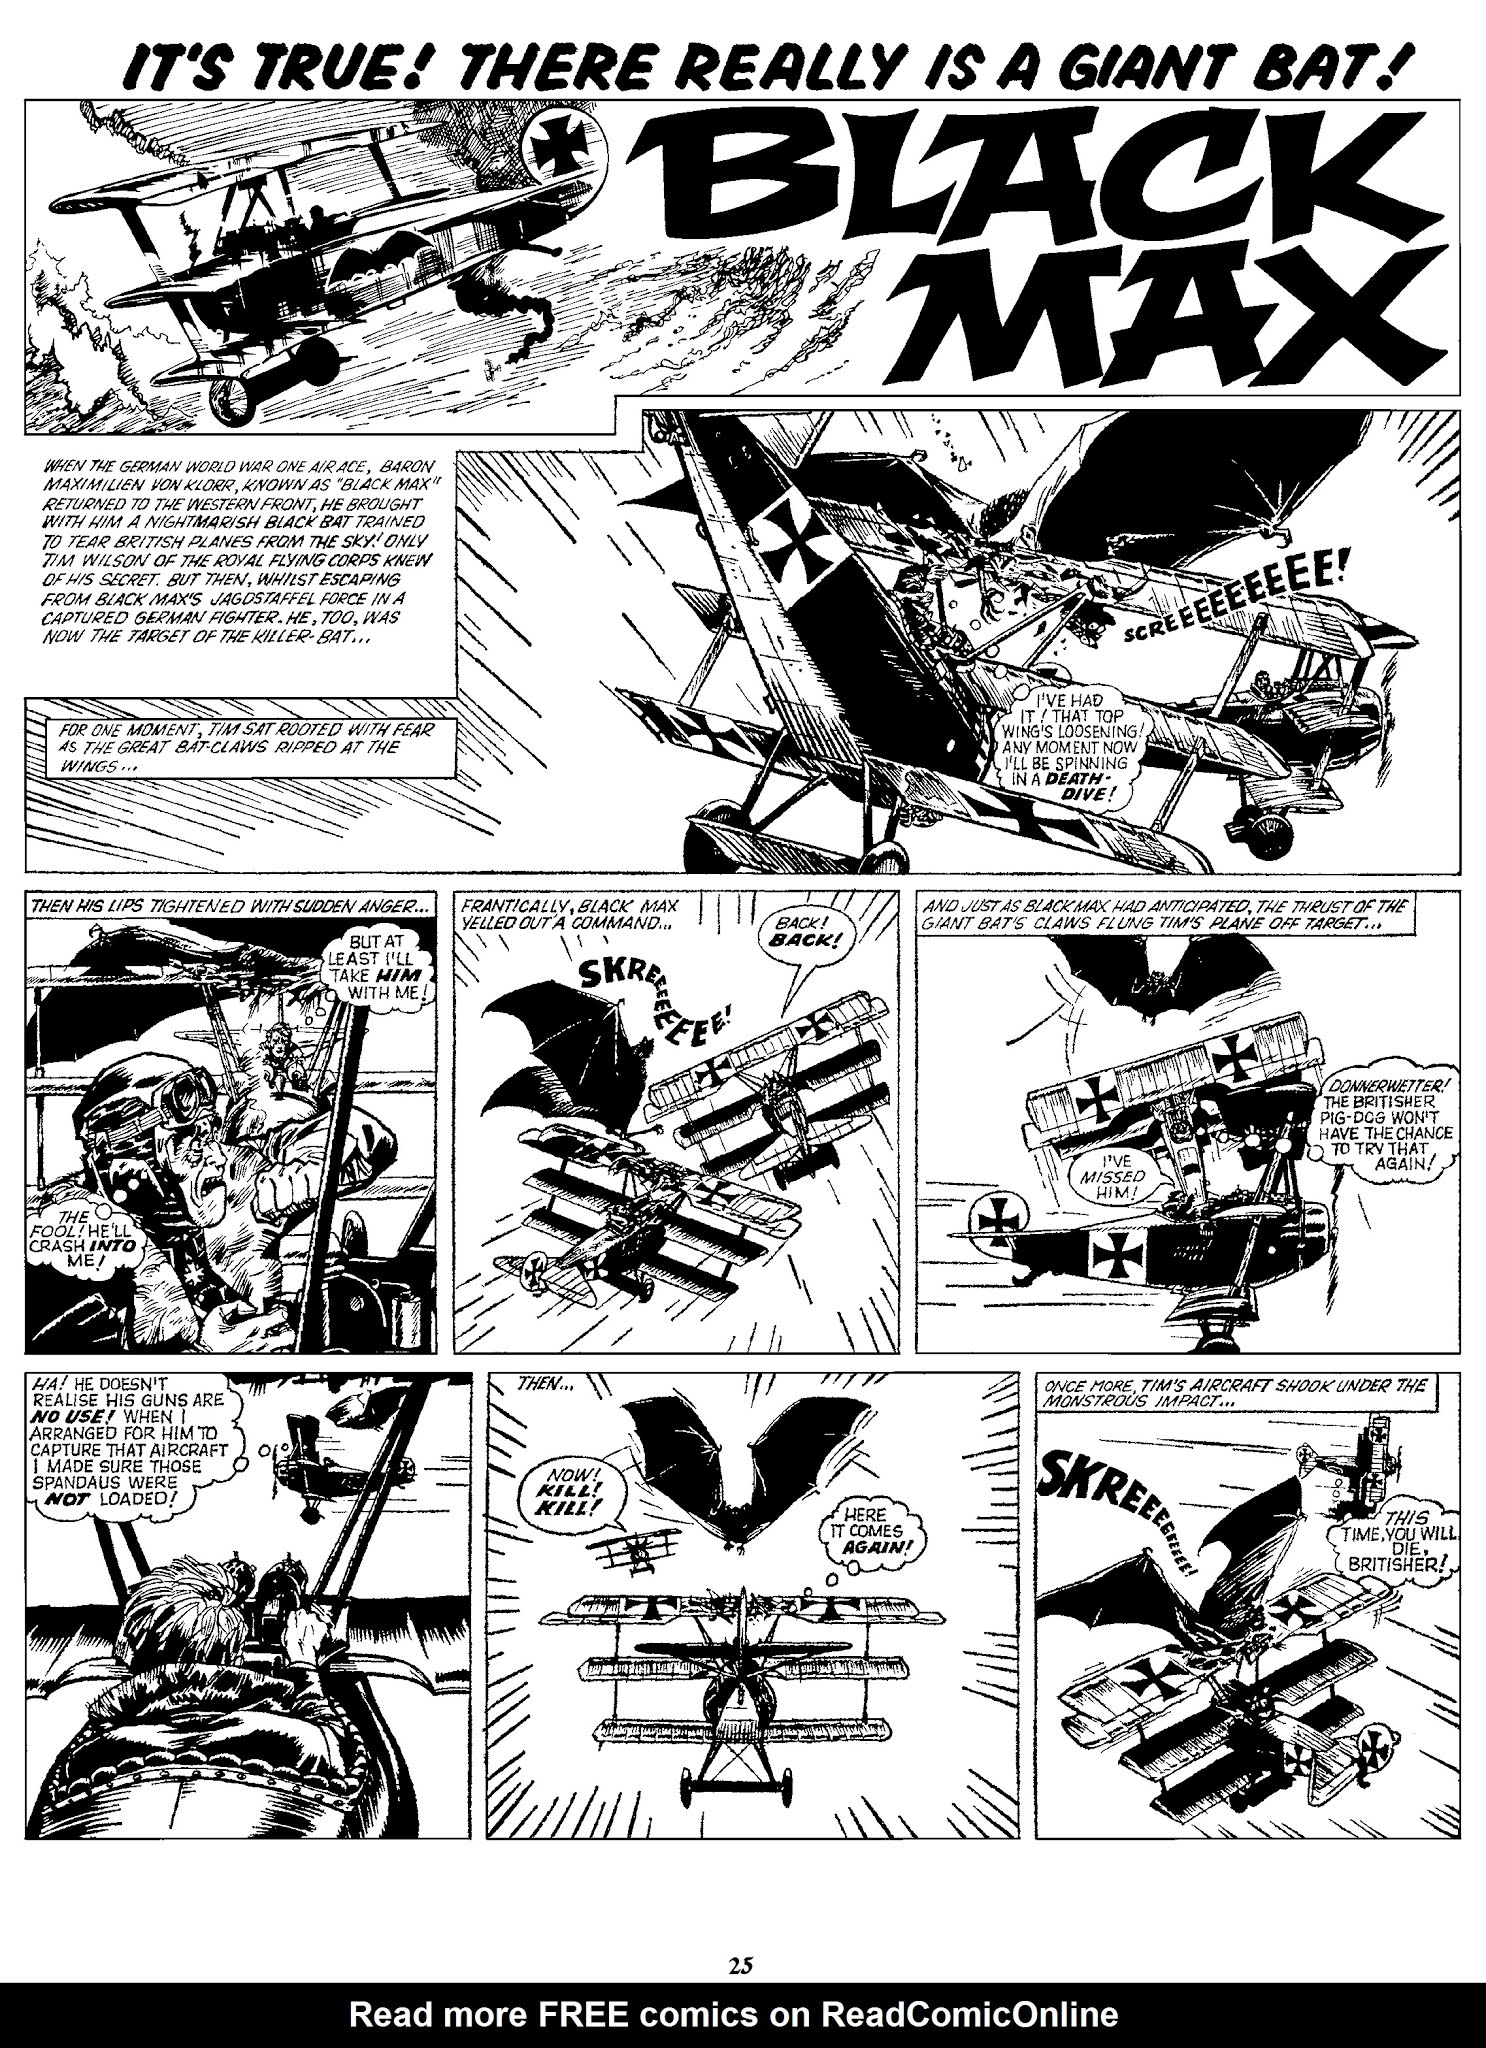 Read online Black Max comic -  Issue # TPB 1 - 27